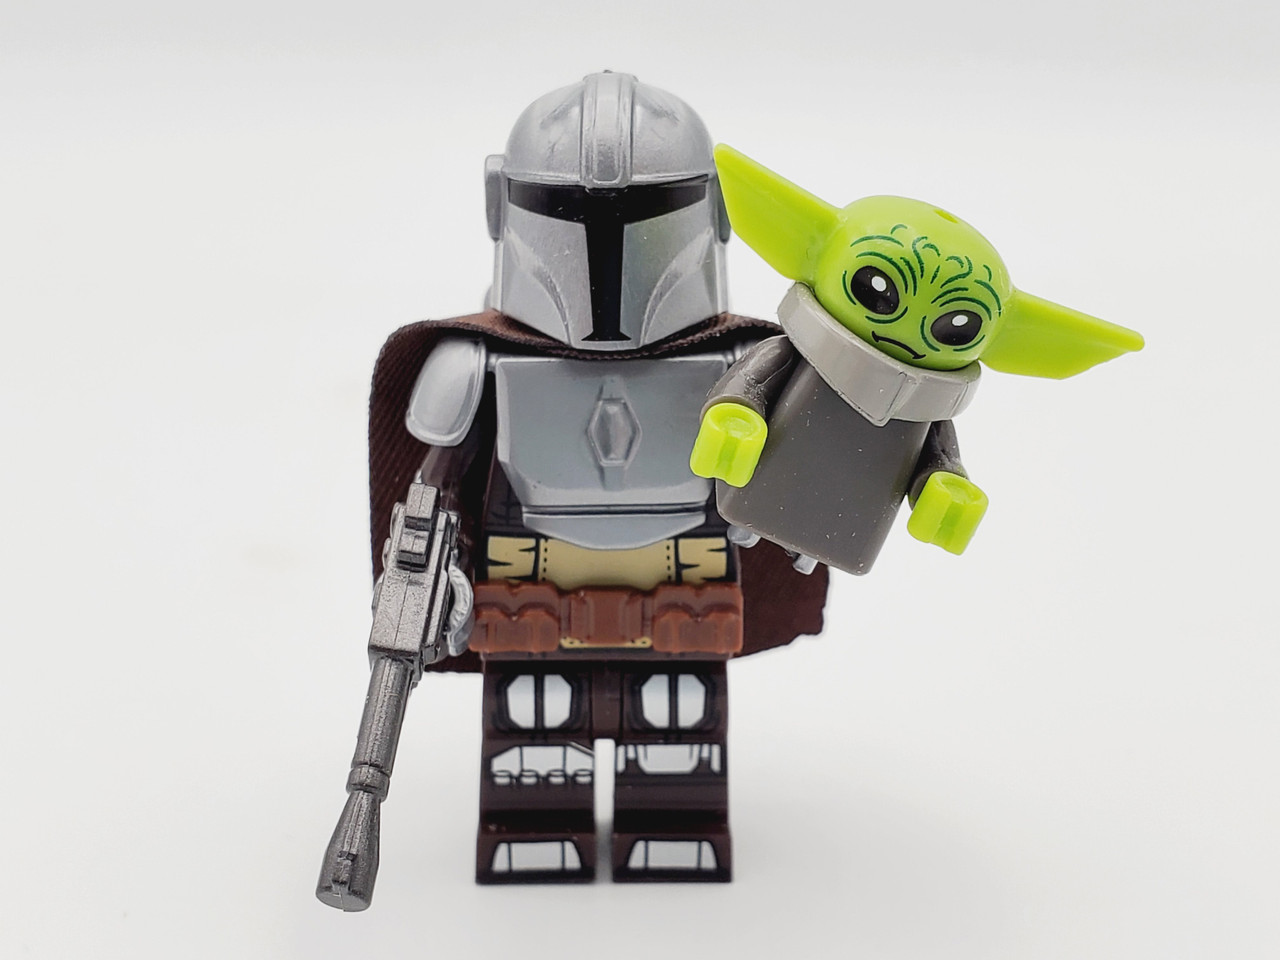 Boba Fett & Grogu (baby Yoda) Lego Minifigures